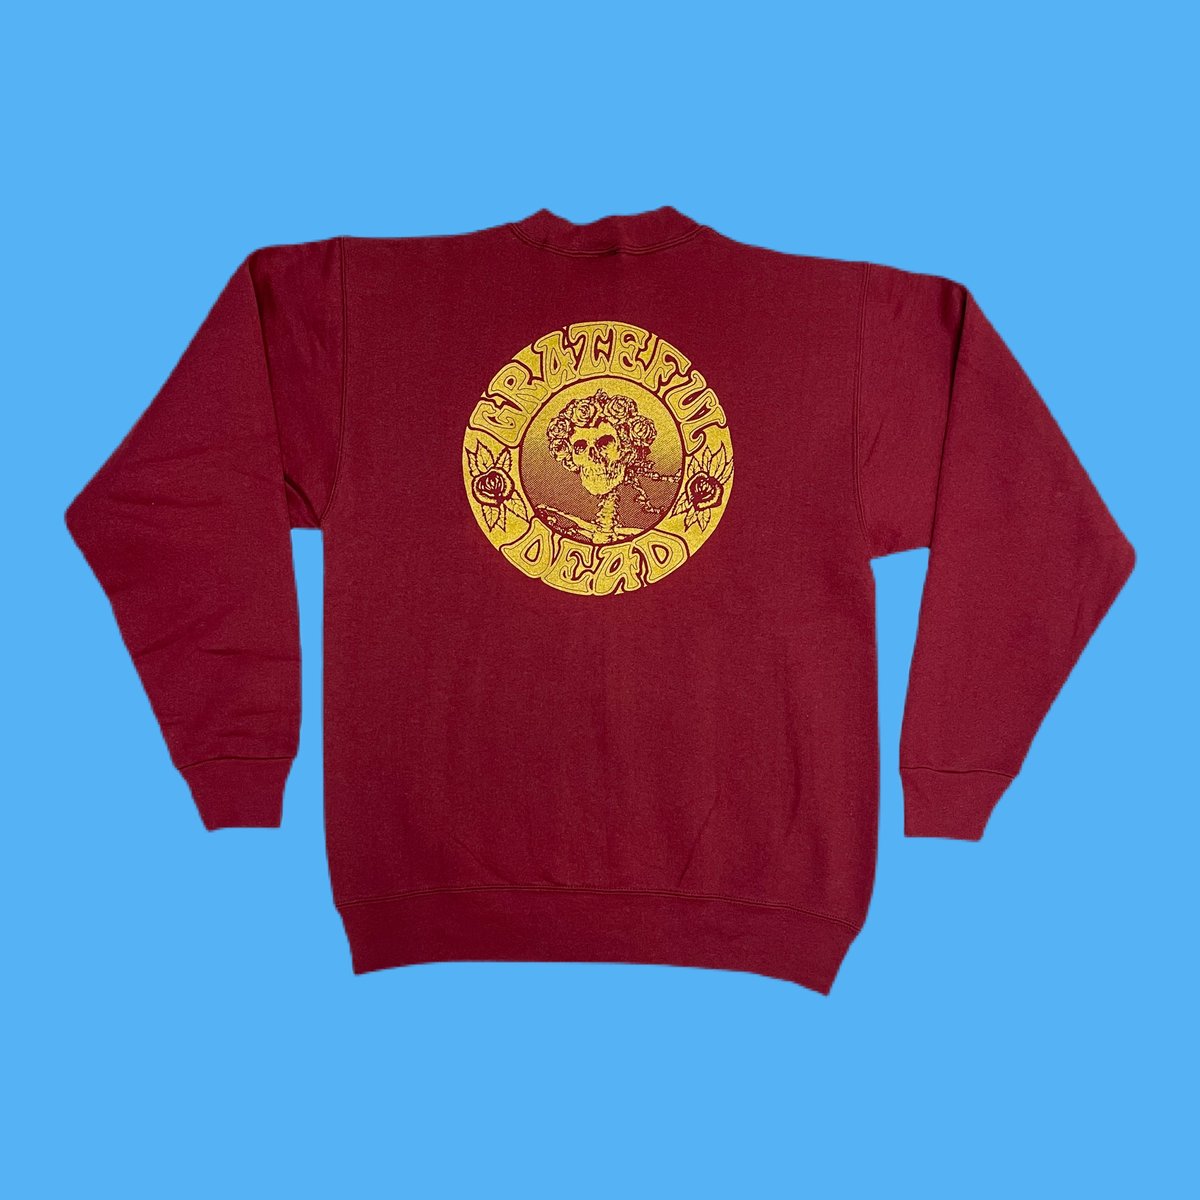 Original Vintage Grateful Dead 1990's Seva Long Sleeve Crewneck Sweatshirt!! - SMALL or MEDIUM